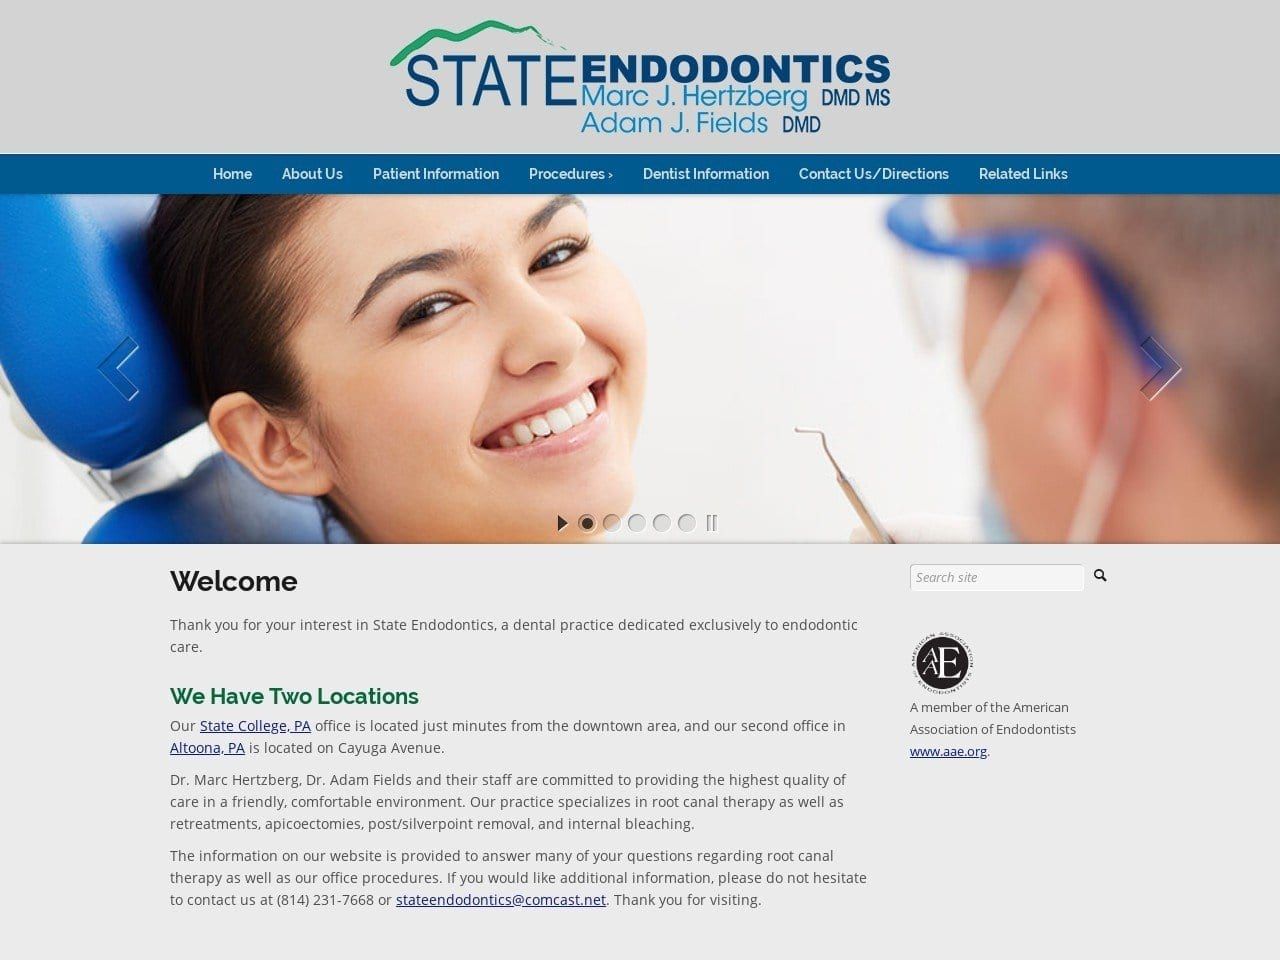 State Endodontics Website Screenshot from stateendodontics.com